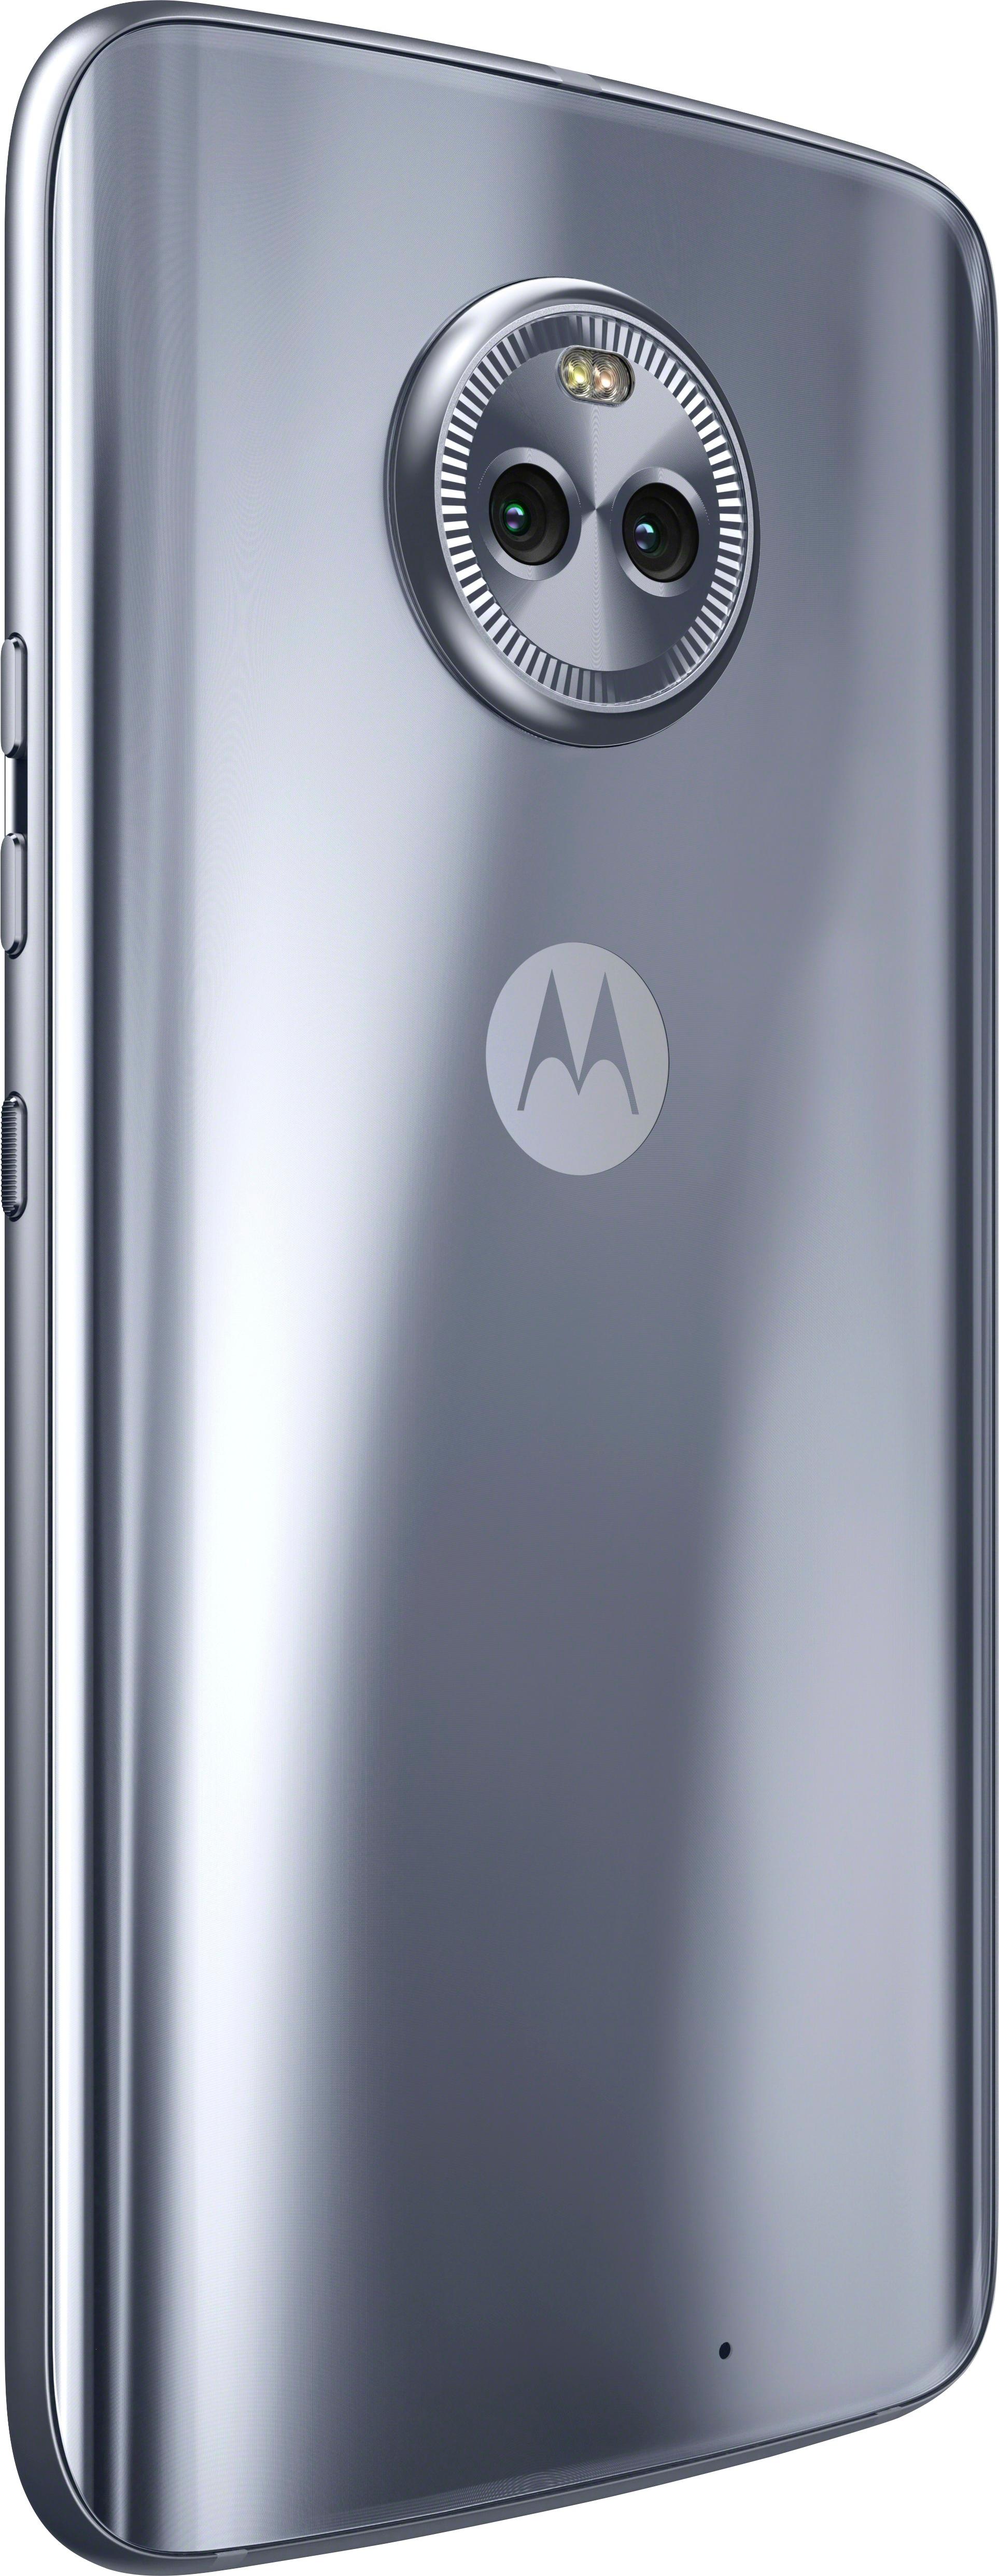 Moto Moto G Play XT1607 4th Gen. 16GB Smartphone 01006NARTL B&H